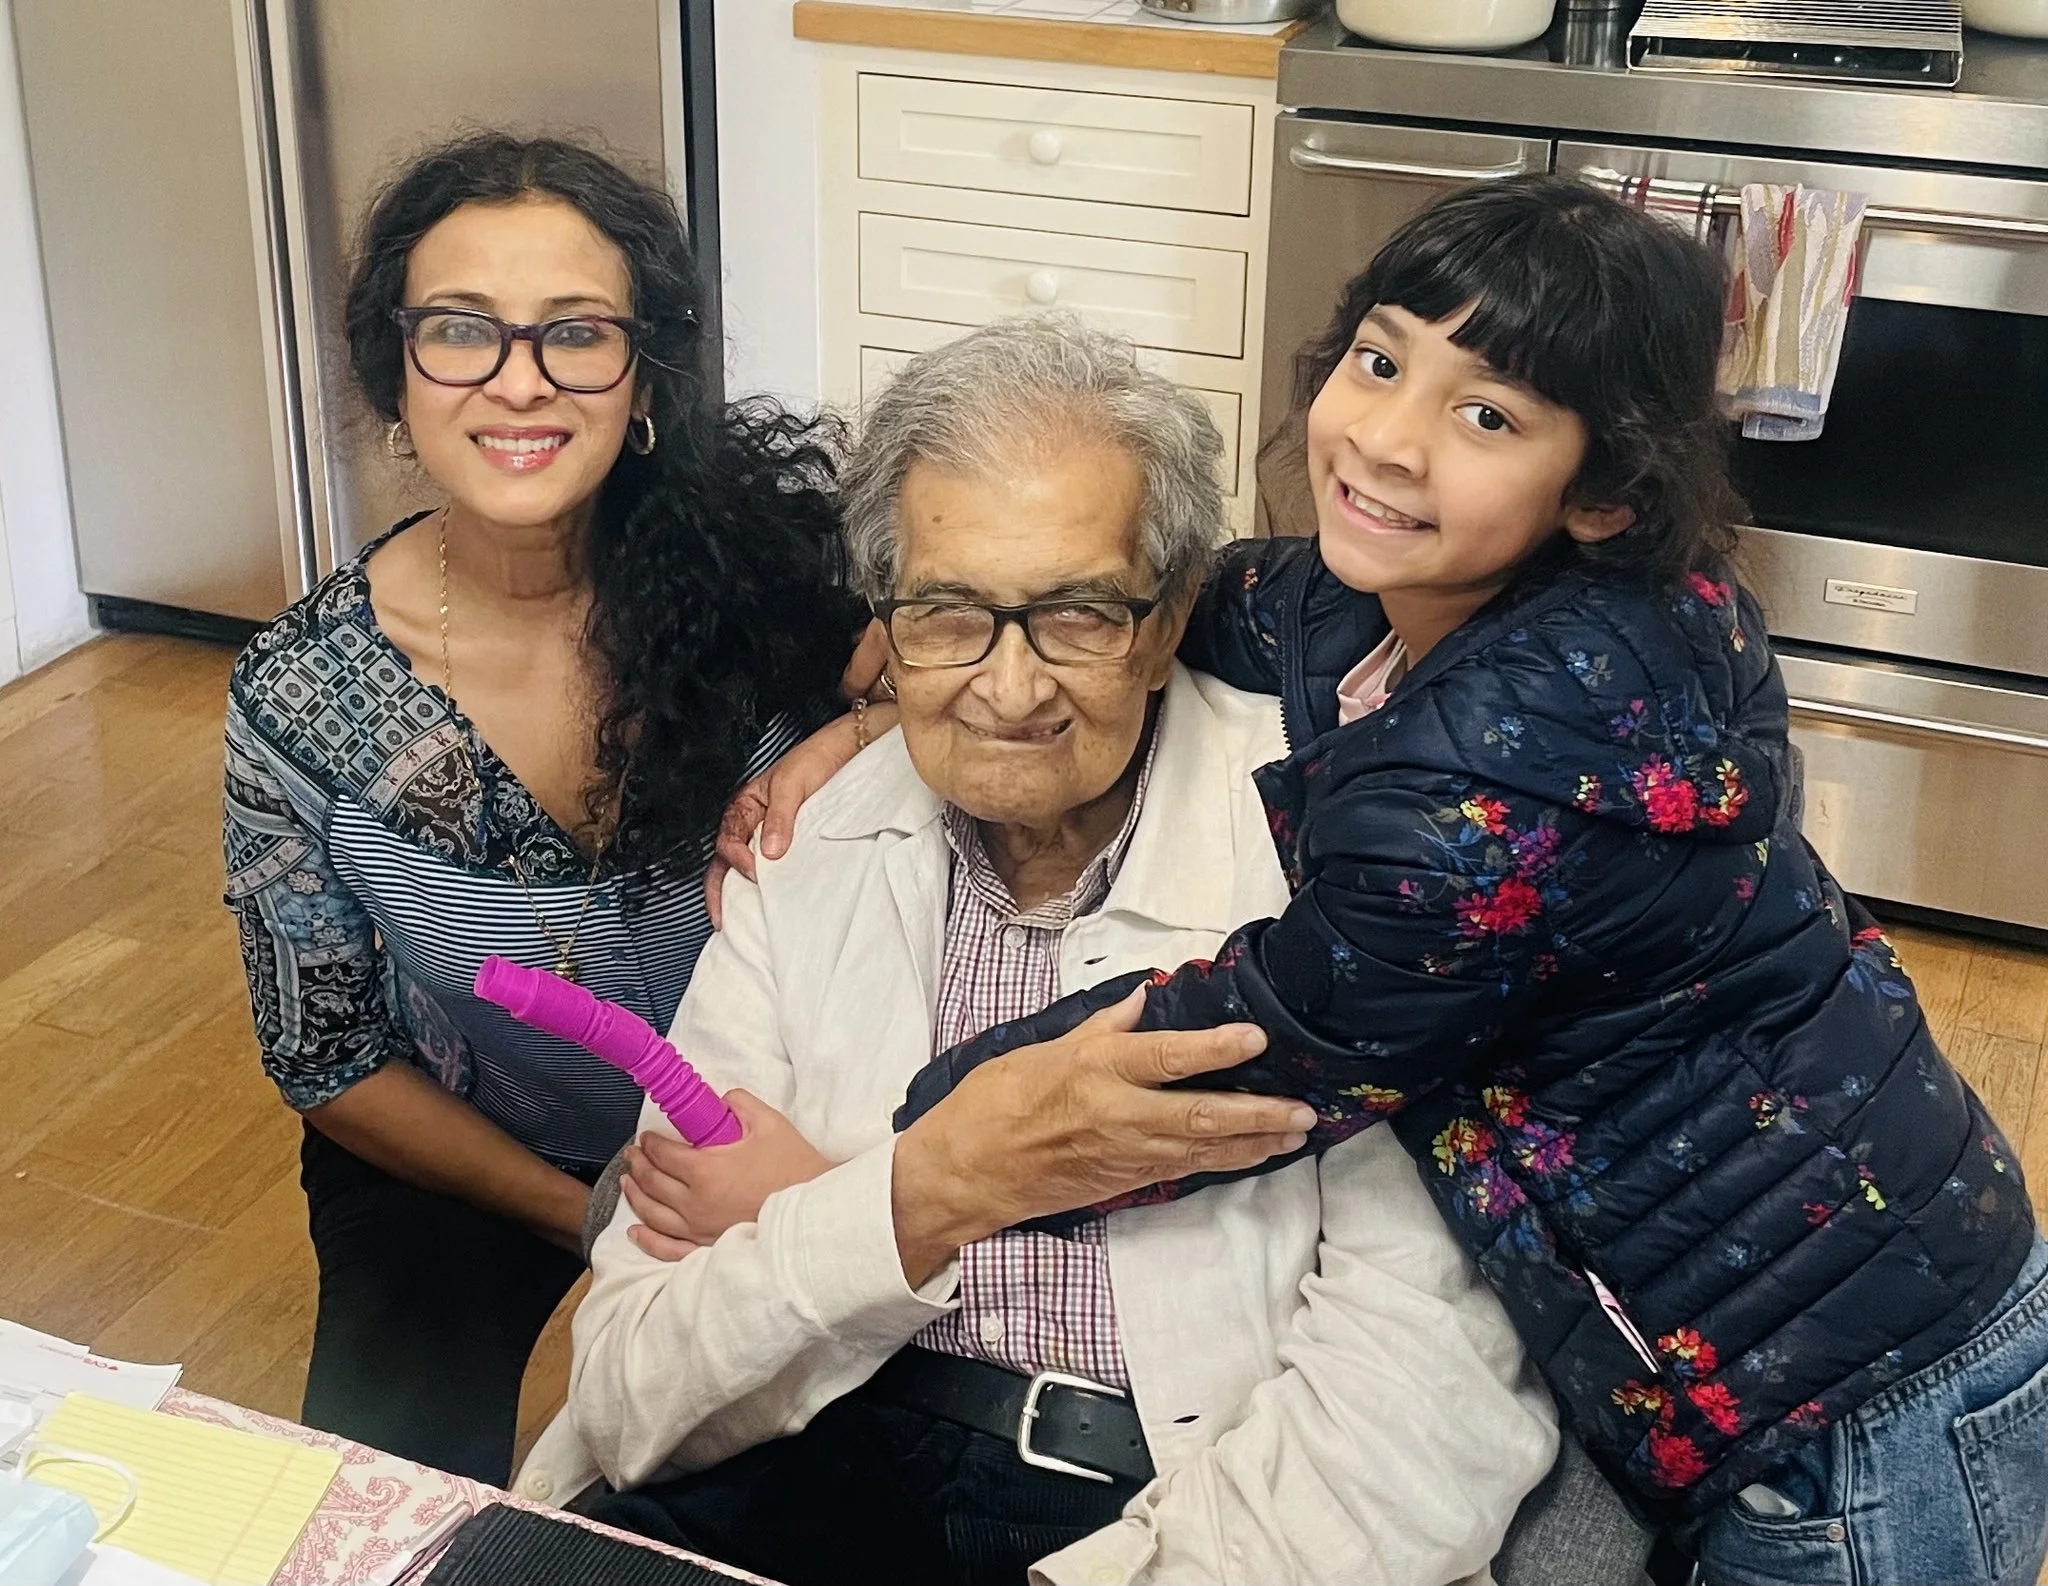 Nobel prize winner Amartya Sen is alive: نوبل انعام یافتہ پروفیسر امرتیہ سین زندہ ہیں اور اپنے کام میں مصروف ہیں،ان کی موت کی خبر فرضی ہے